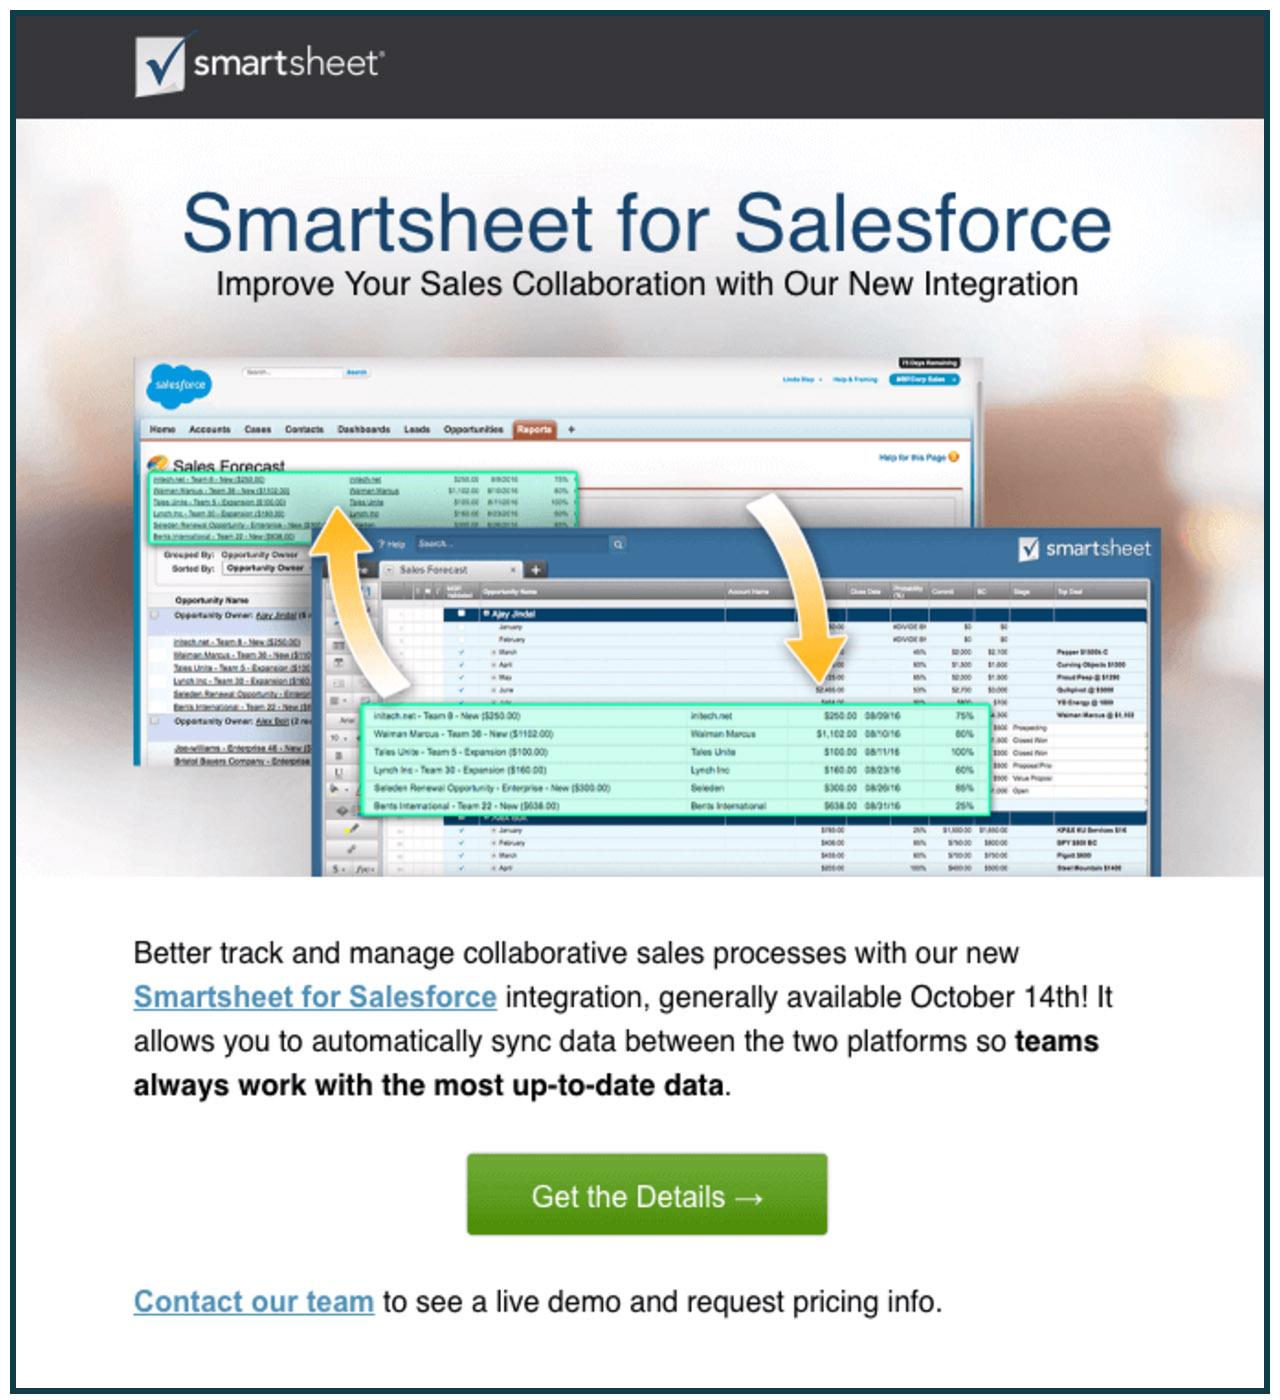 Smartsheet for Salesforce